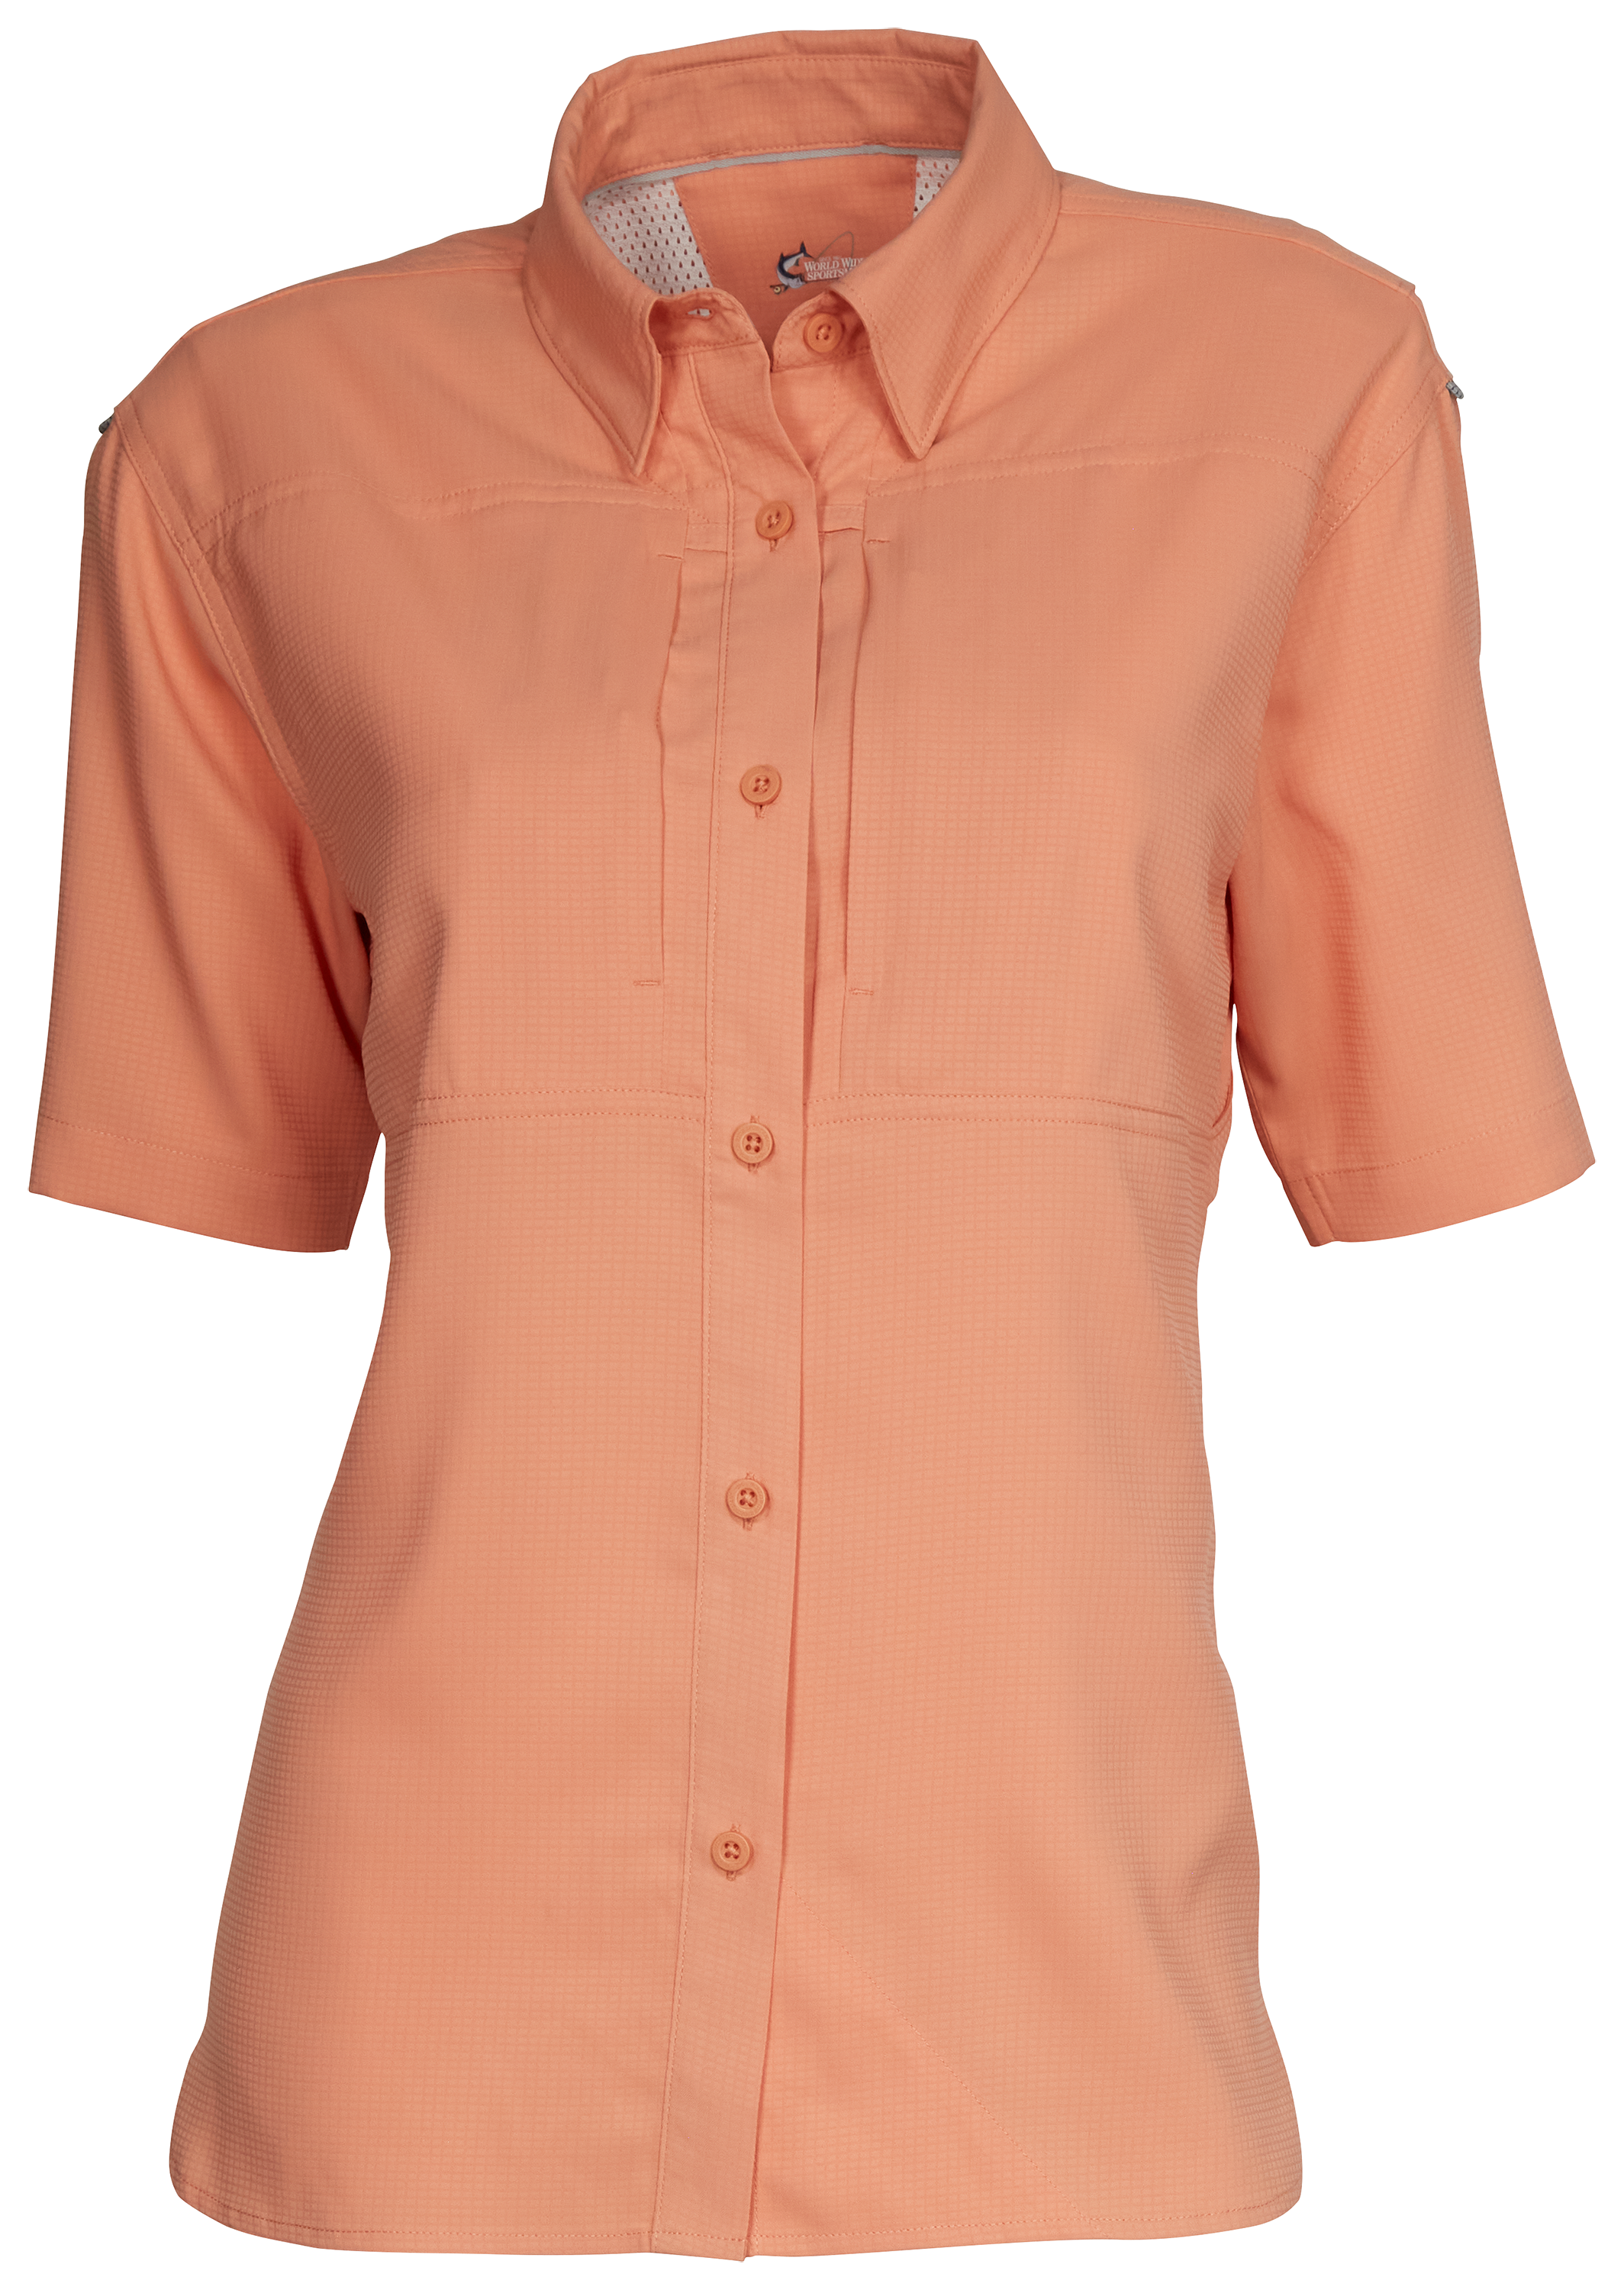 World Wide Sportsman Marina Short-Sleeve Shirt for Ladies - Canyon Sunset - L